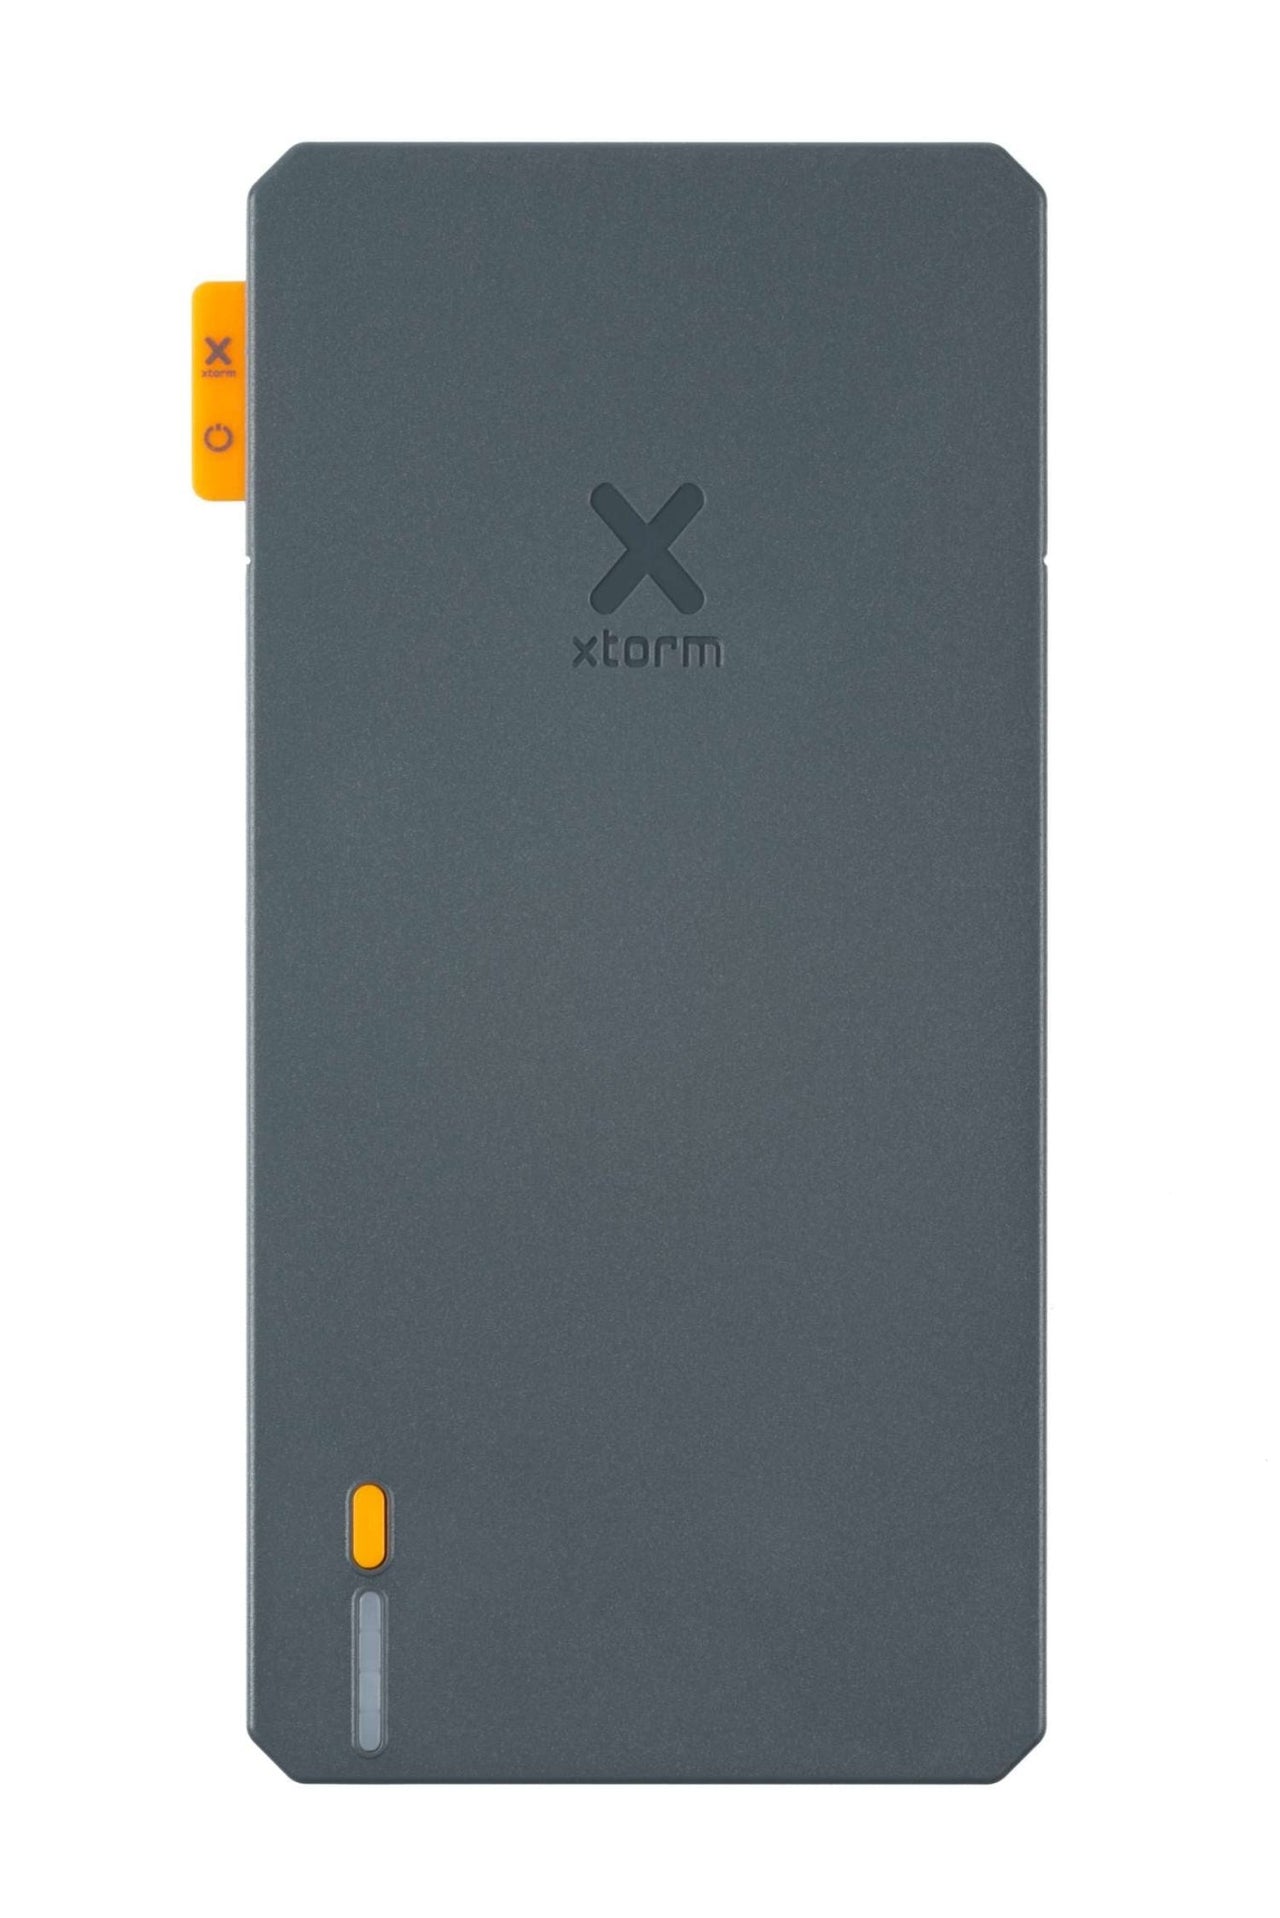 Essential Powerbank - 20.000 mAh - Xtorm DE